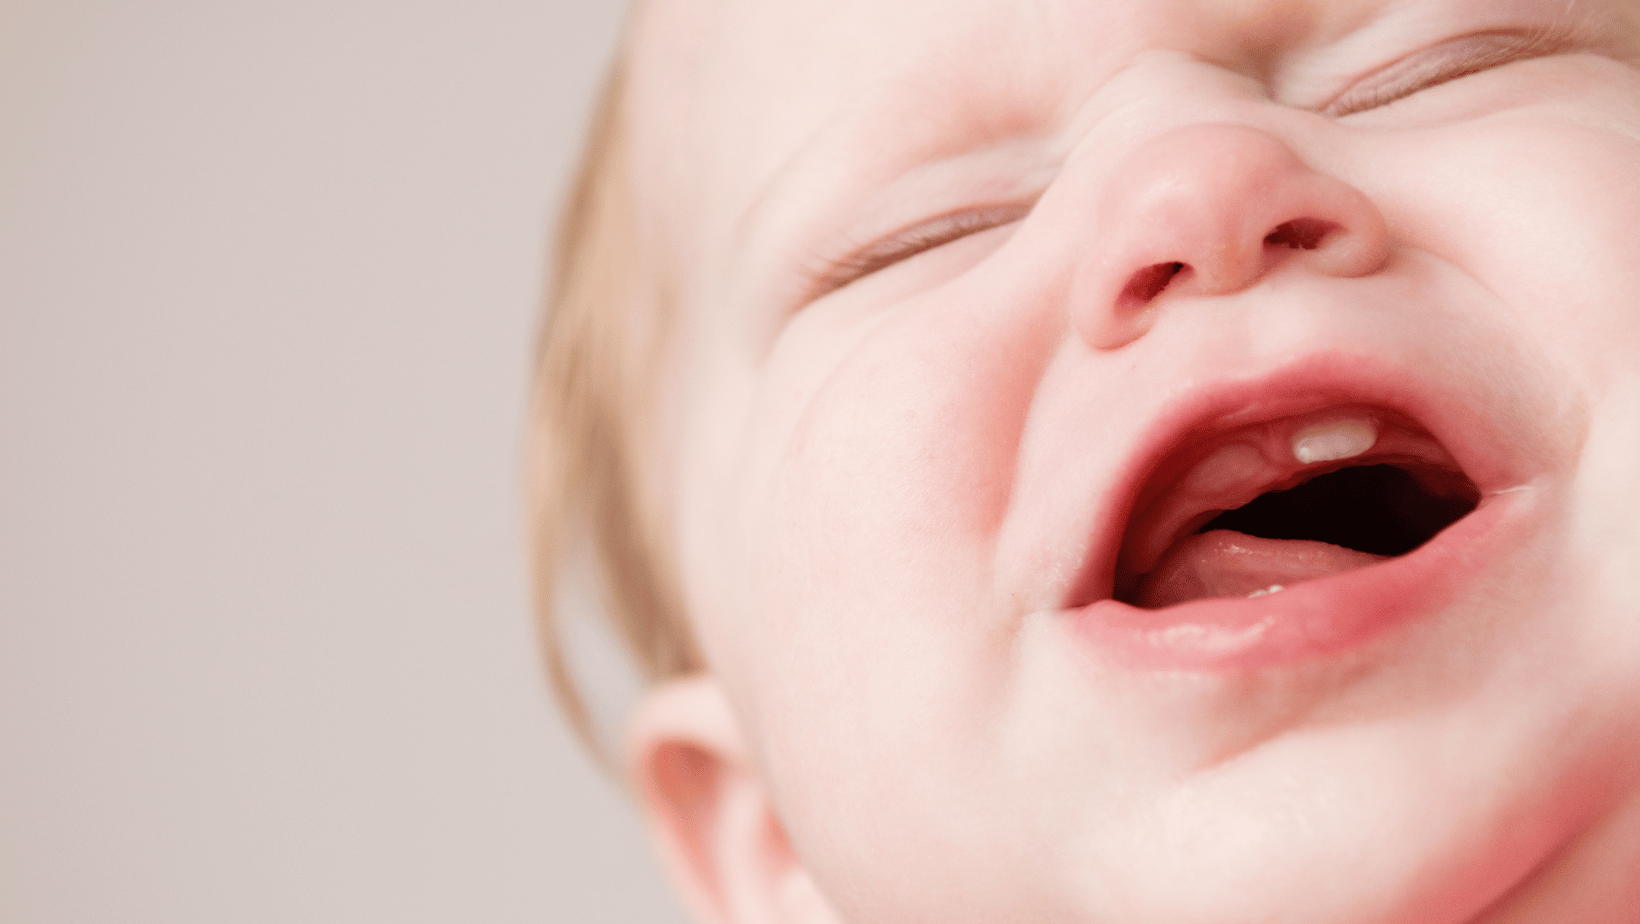 Teething pain - Baby crying